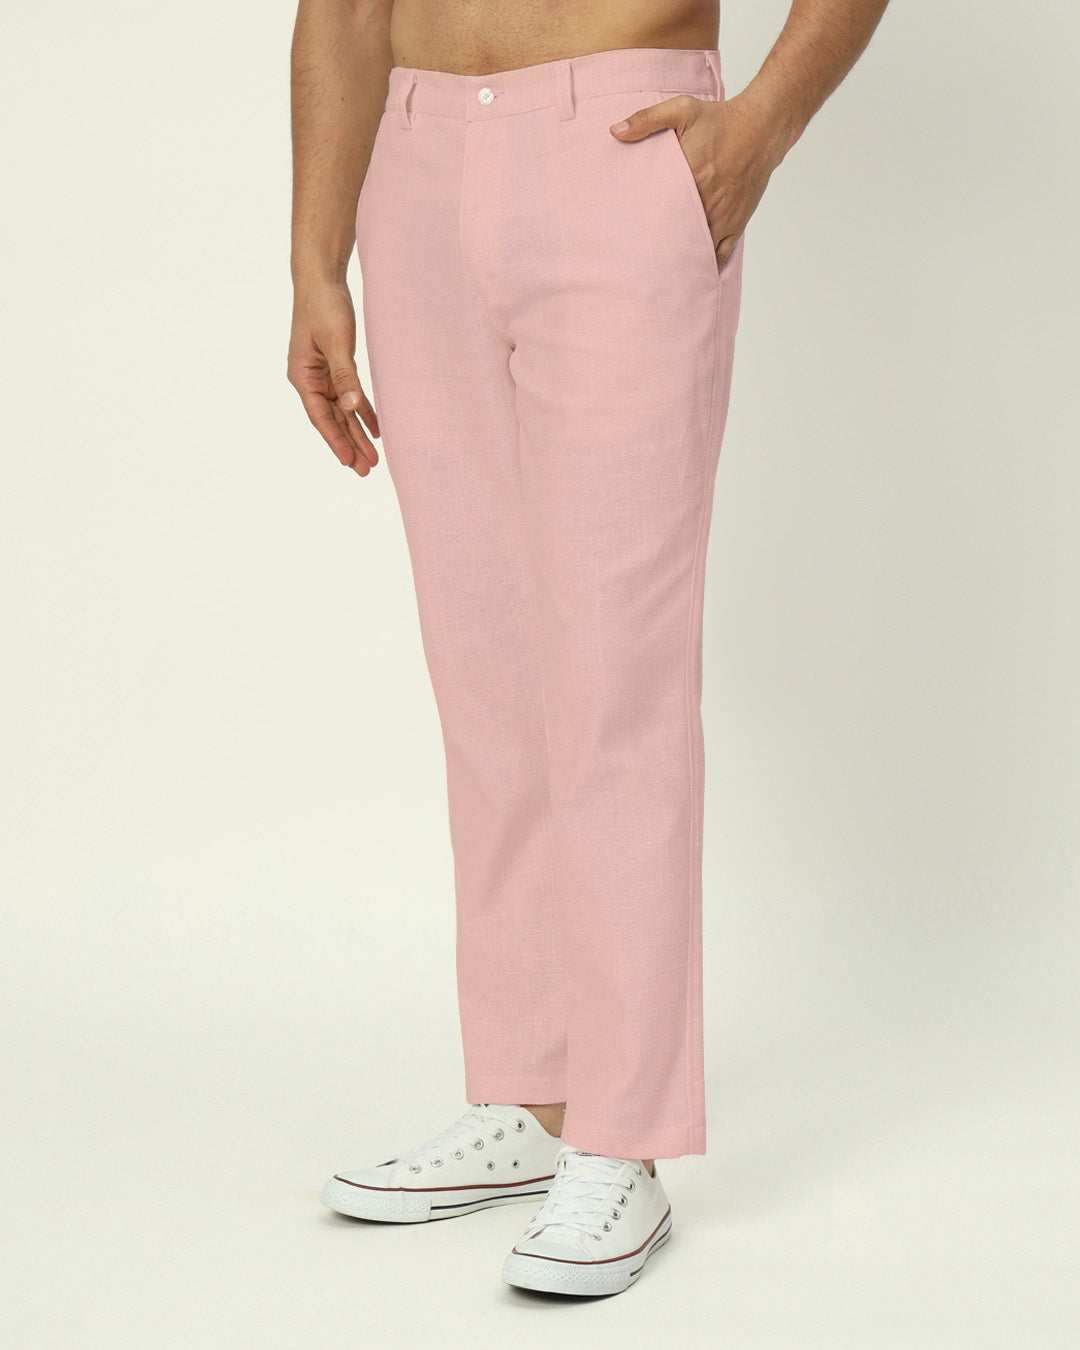 Modern Classic Fondant Pink Men's Pants